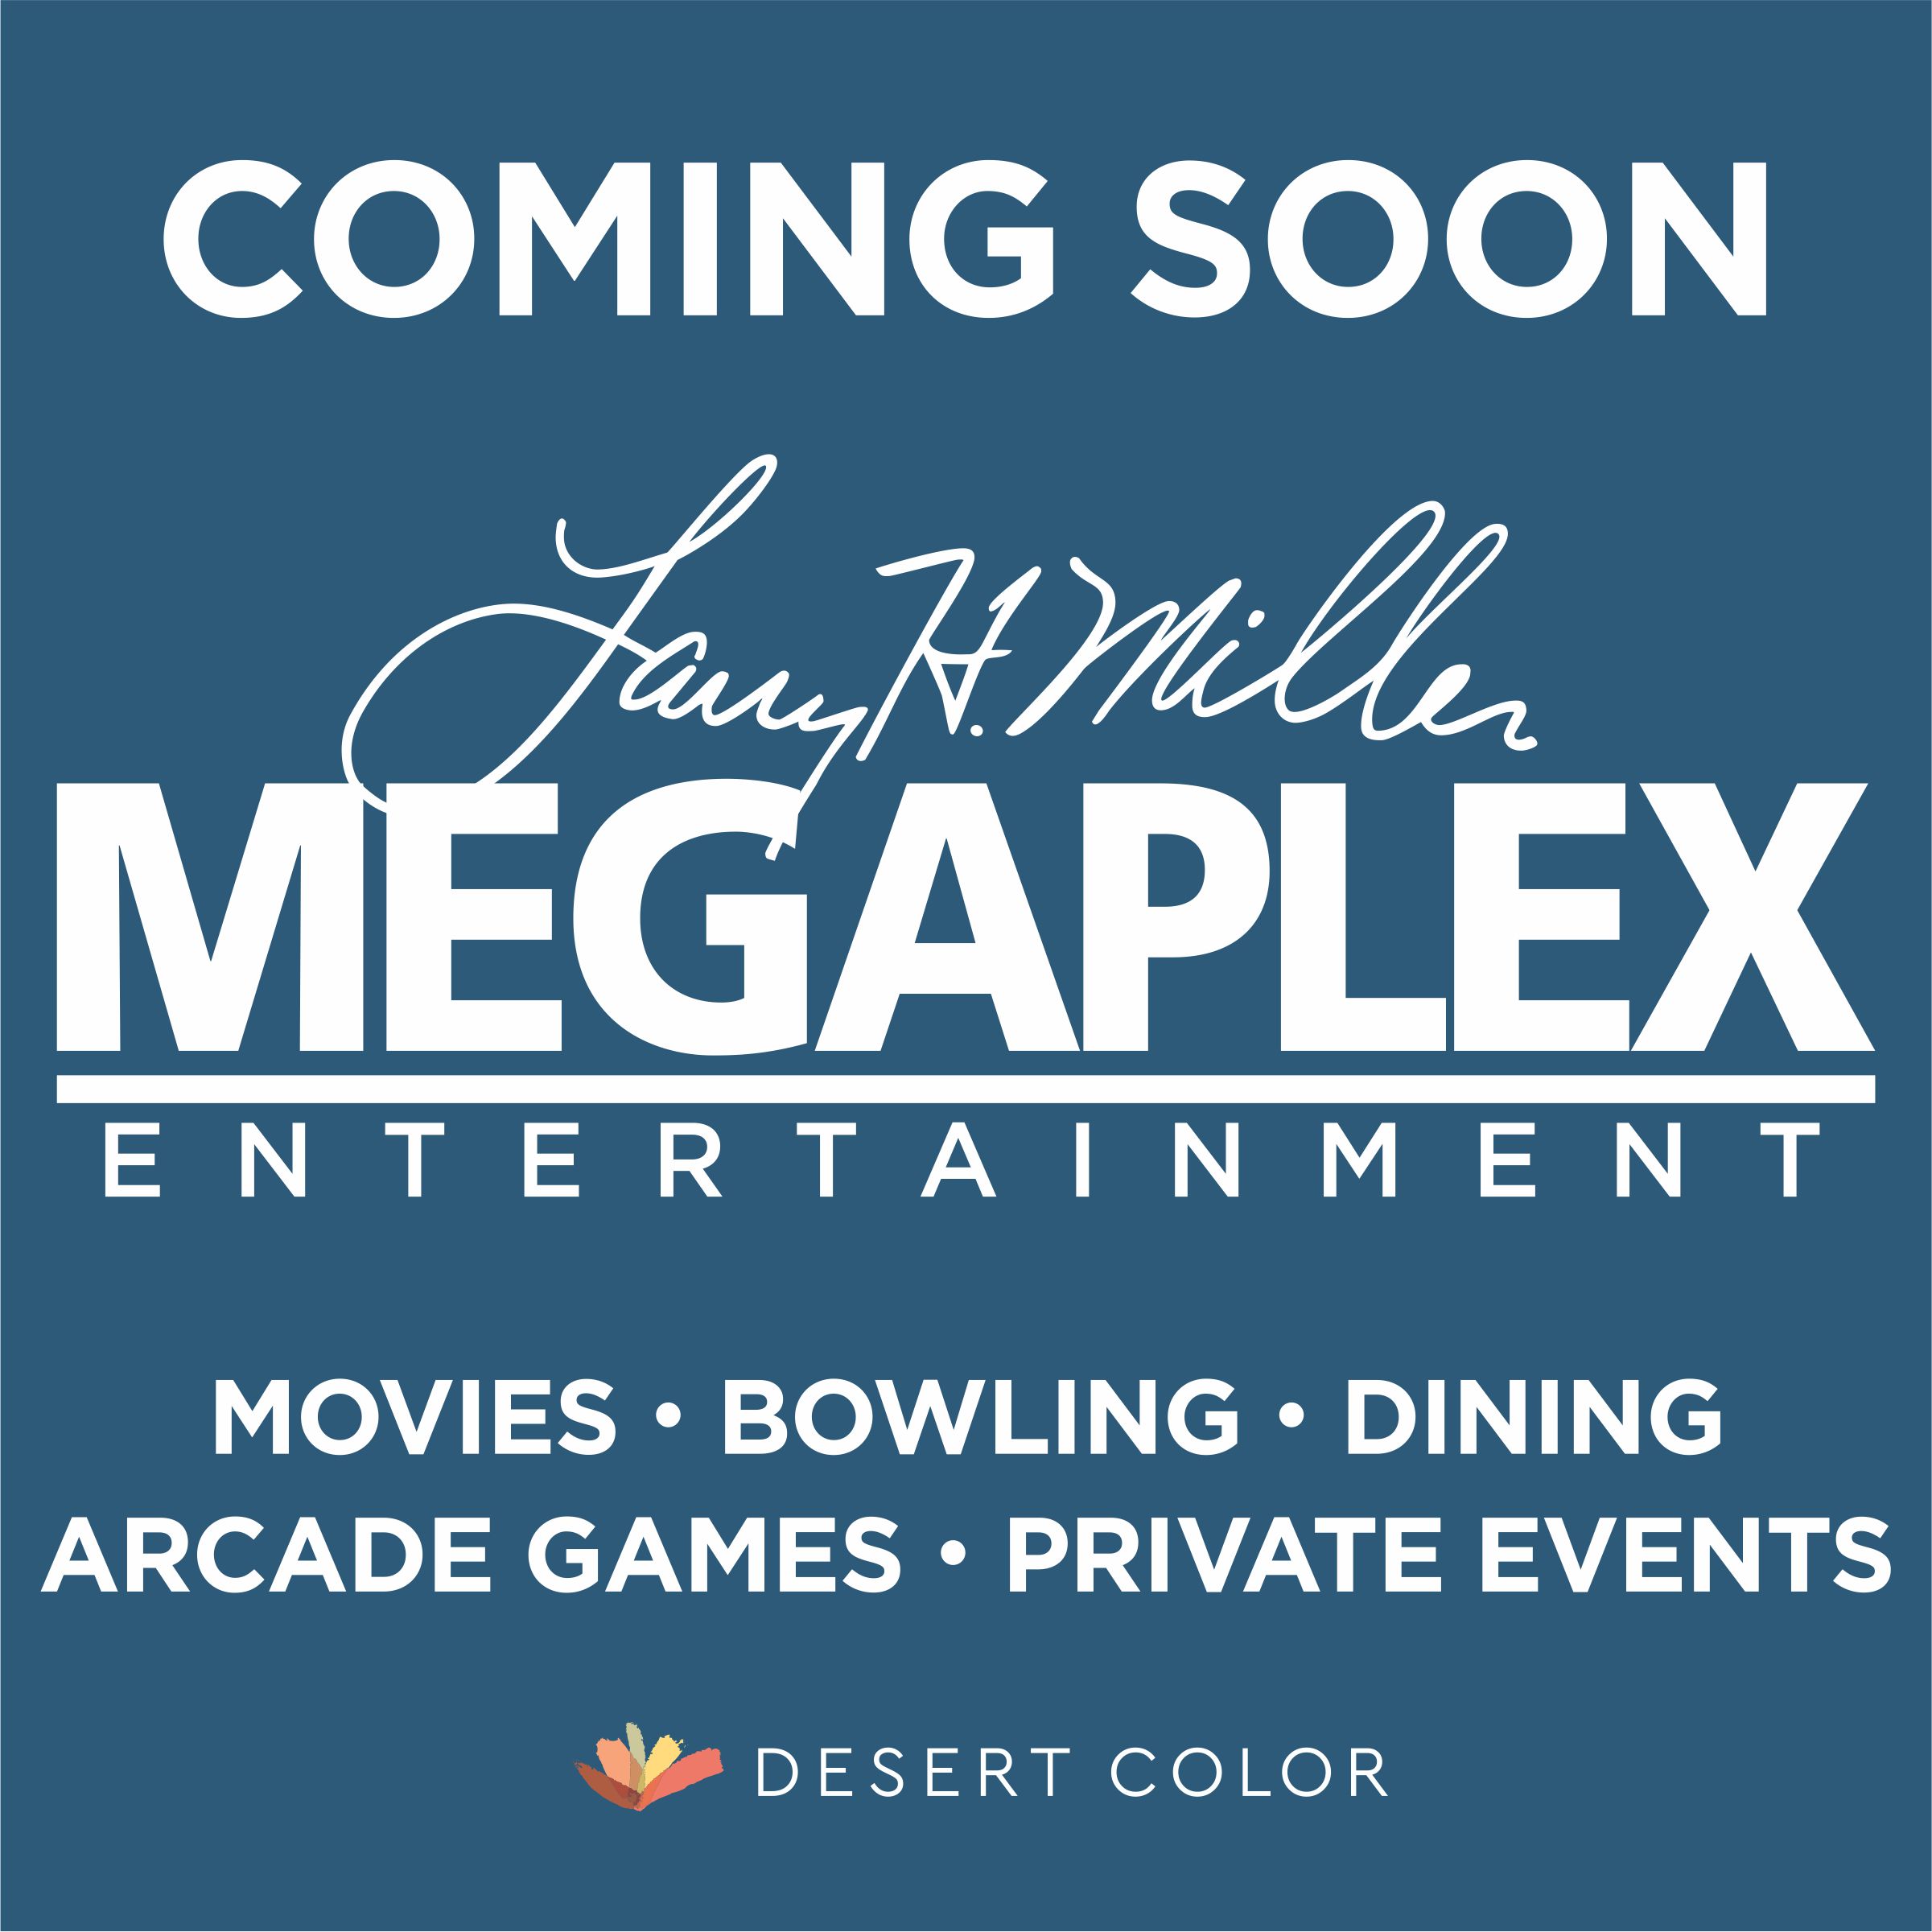 Larry H. Miller Sports + Entertainment announced further expansion of Megaplex Entertainment to St George’s Desert Color.